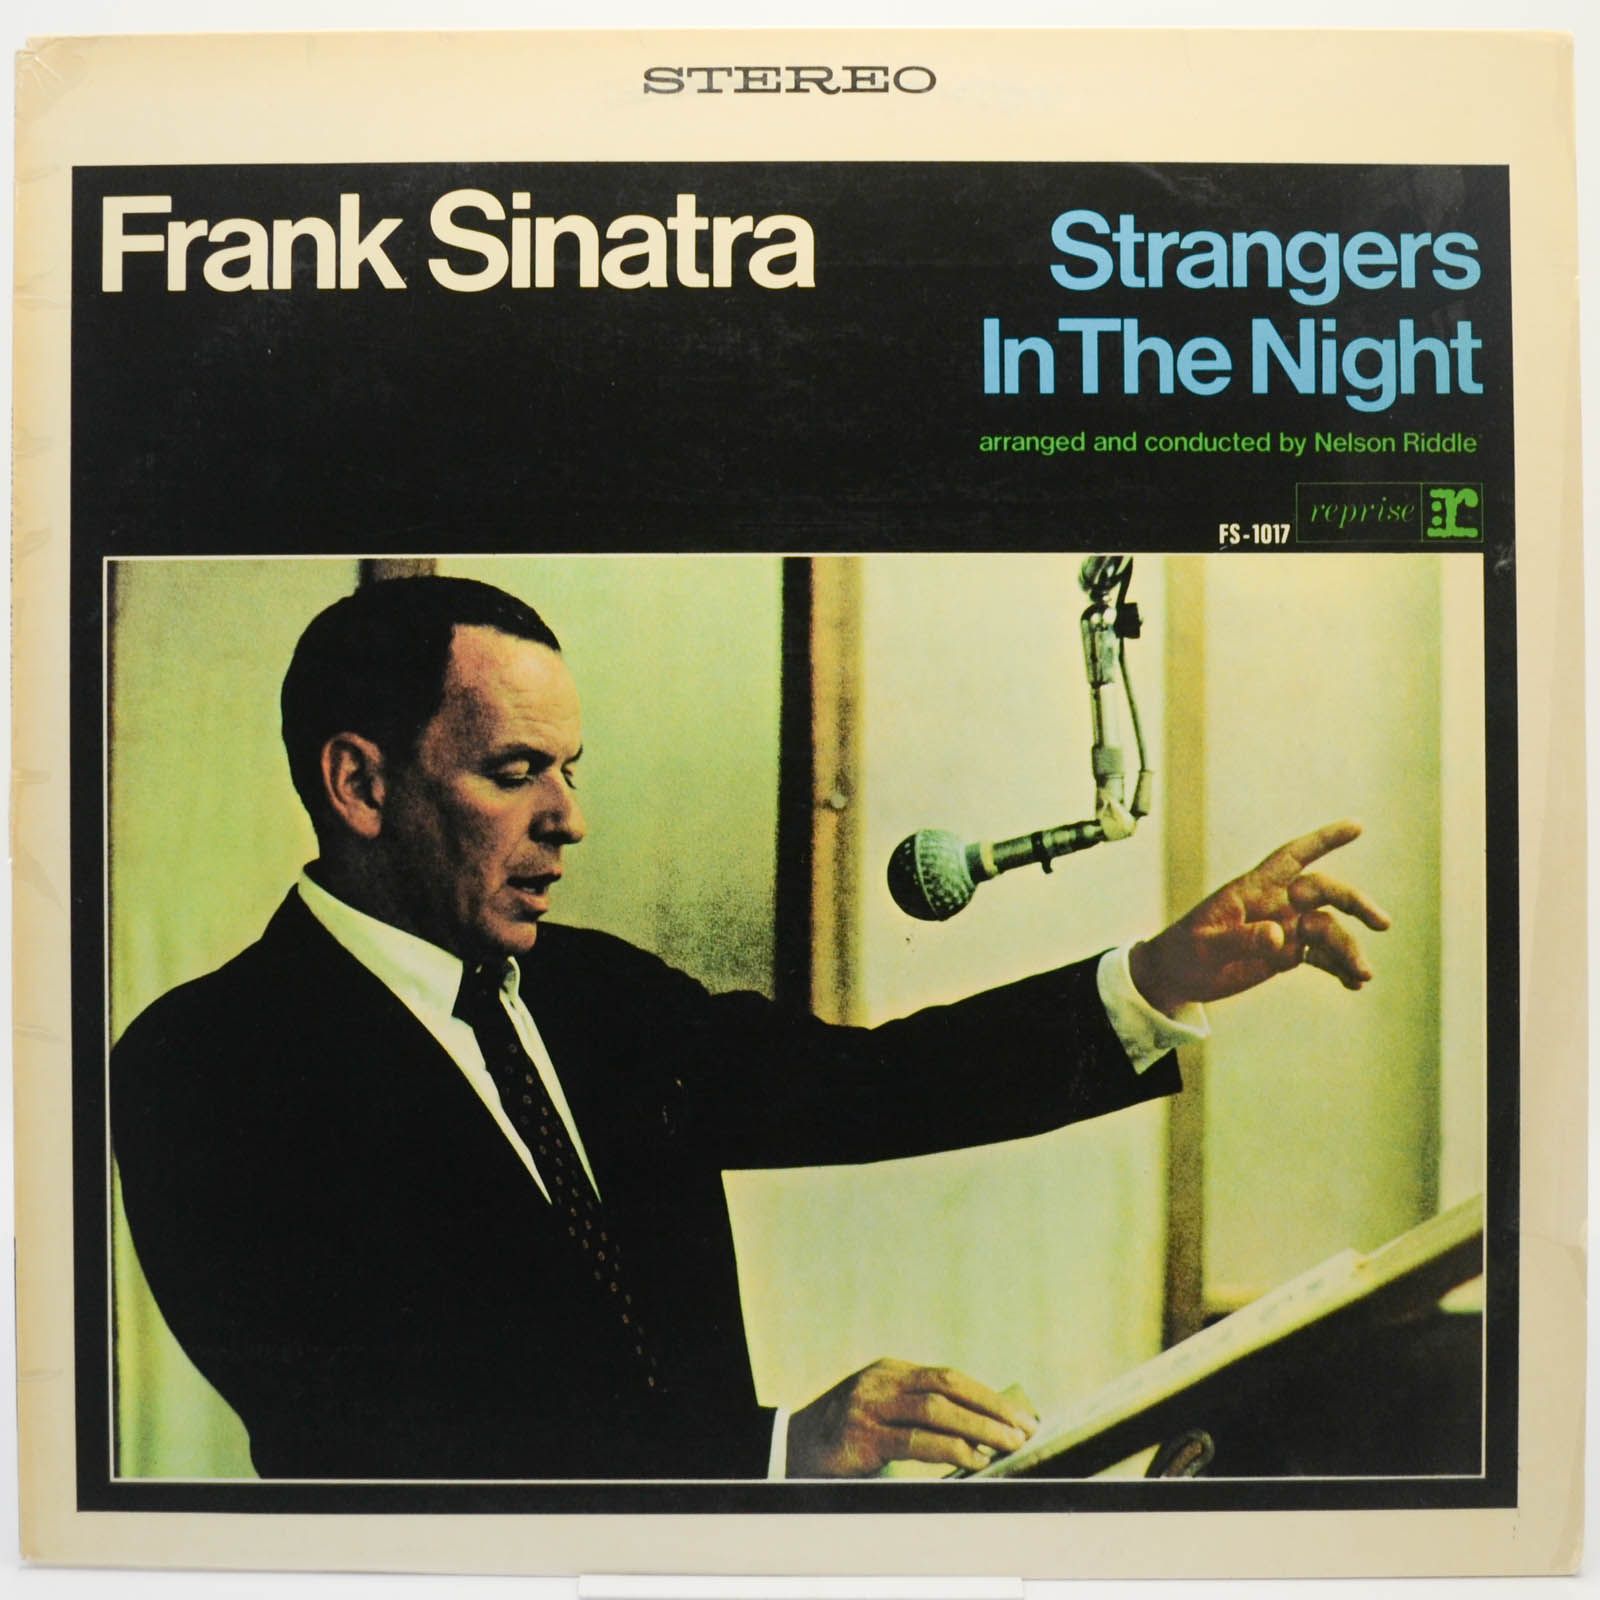 Frank Sinatra — Strangers In The Night, 1966